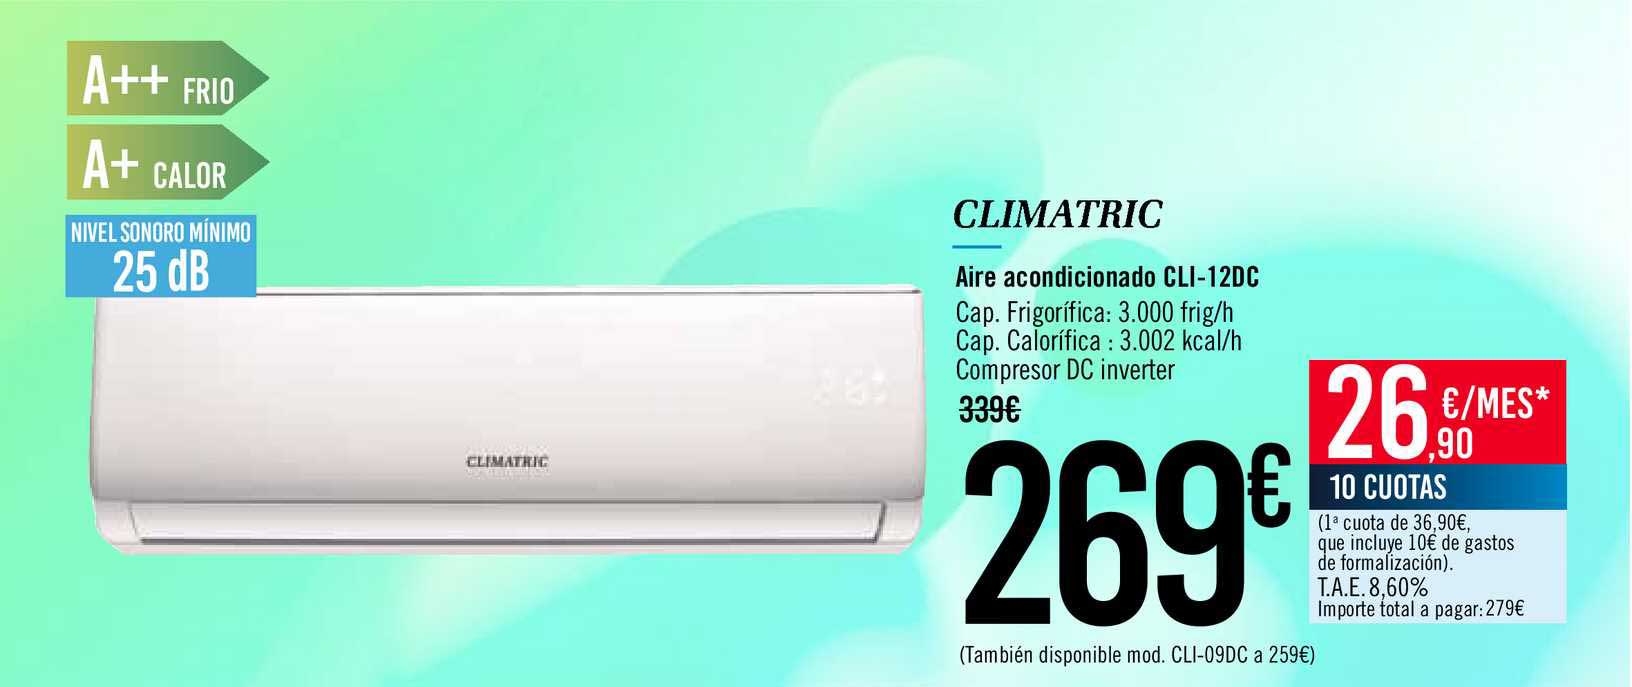 Climatric Aire Acondicionado Cli-12dc en Carrefour